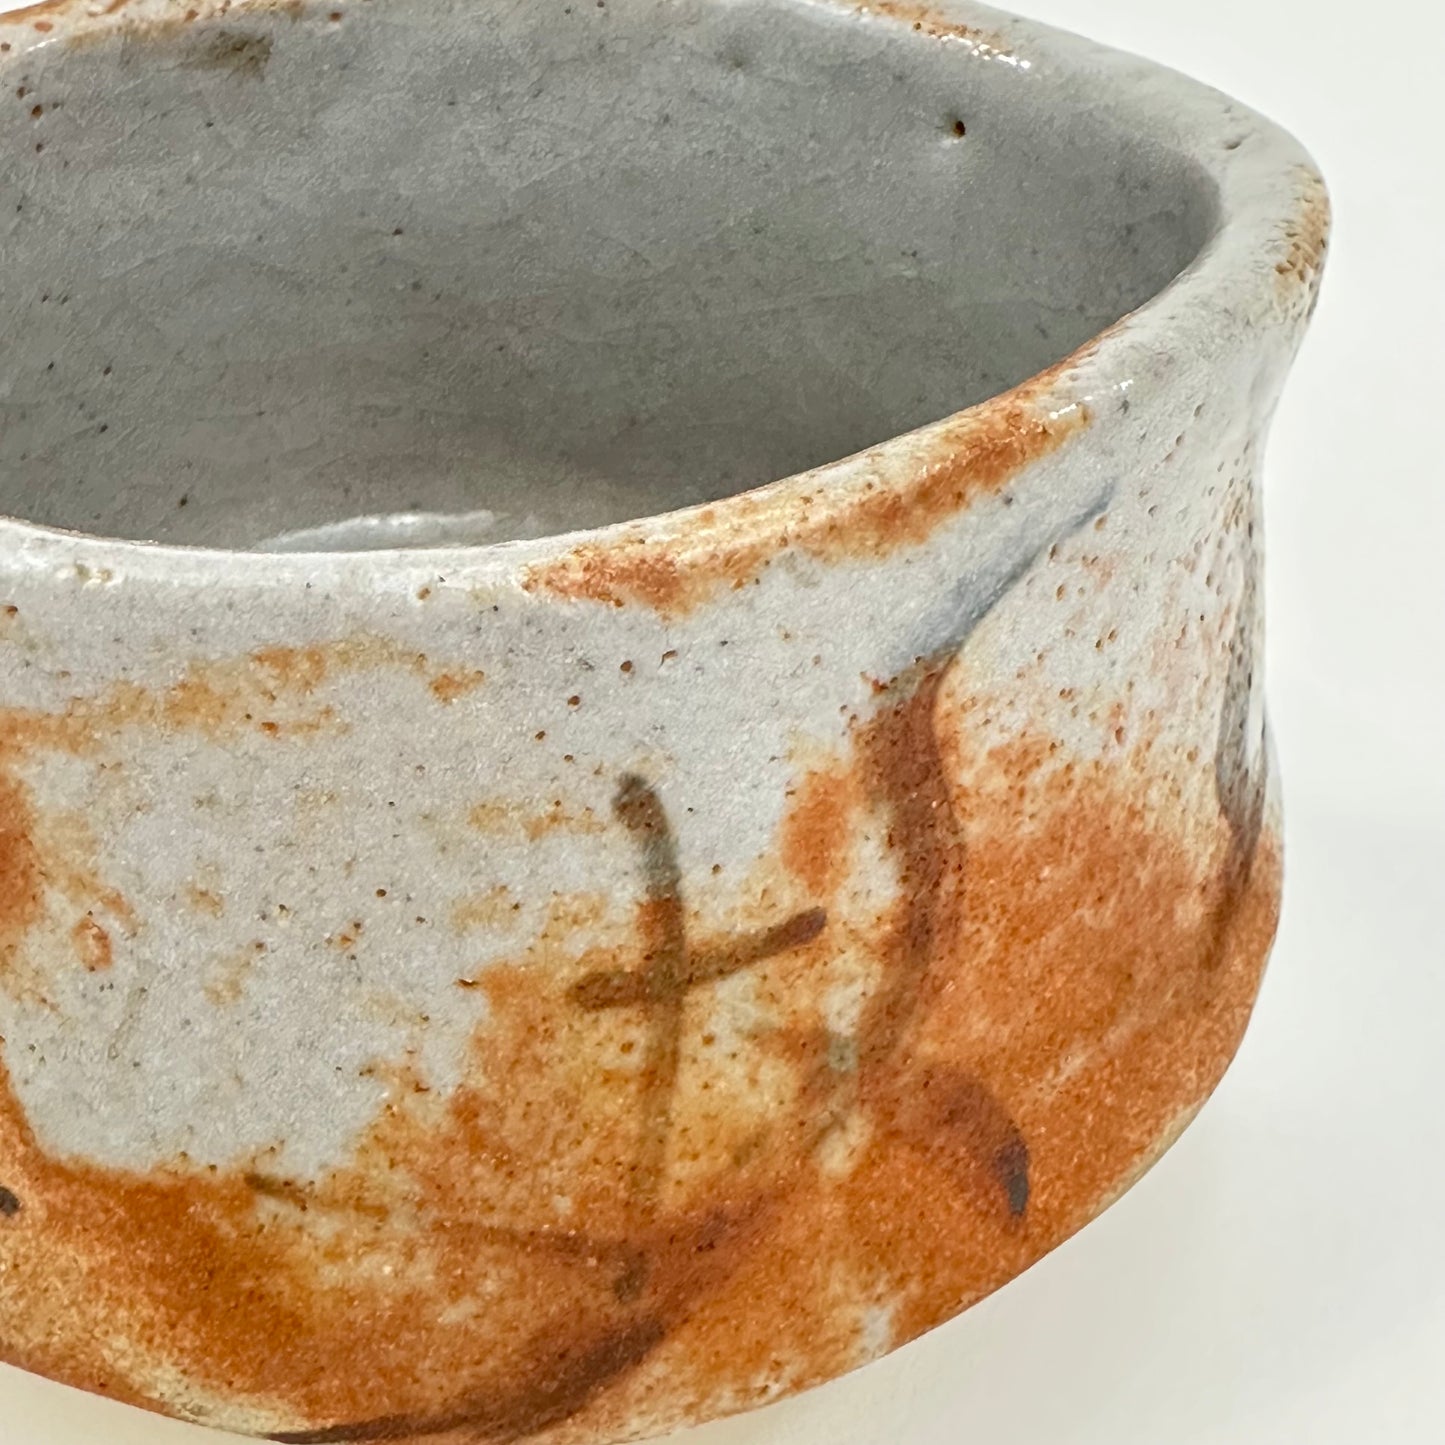 Vintage Japanese Hand Thrown Ceramic Tea Bowl Chawan